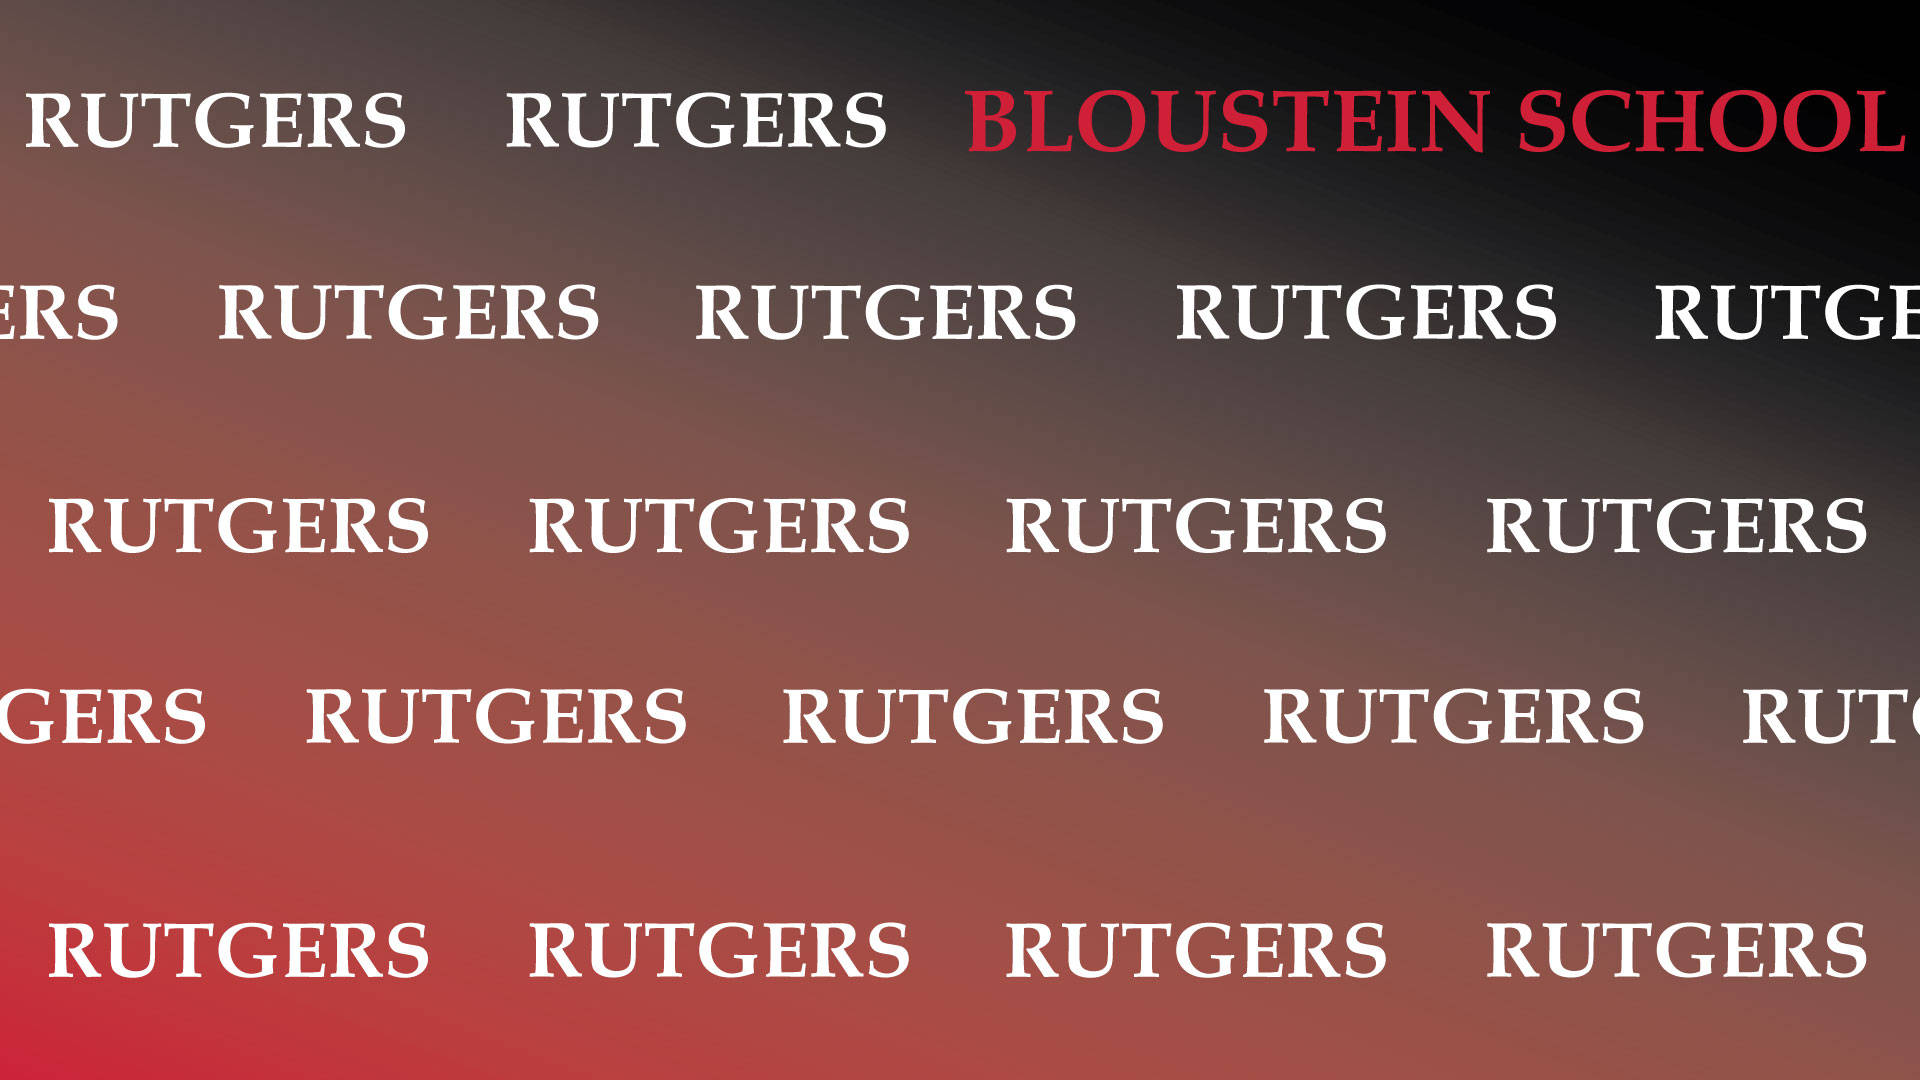 Fondosimple De La Escuela Bloustein De Rutgers Fondo de pantalla